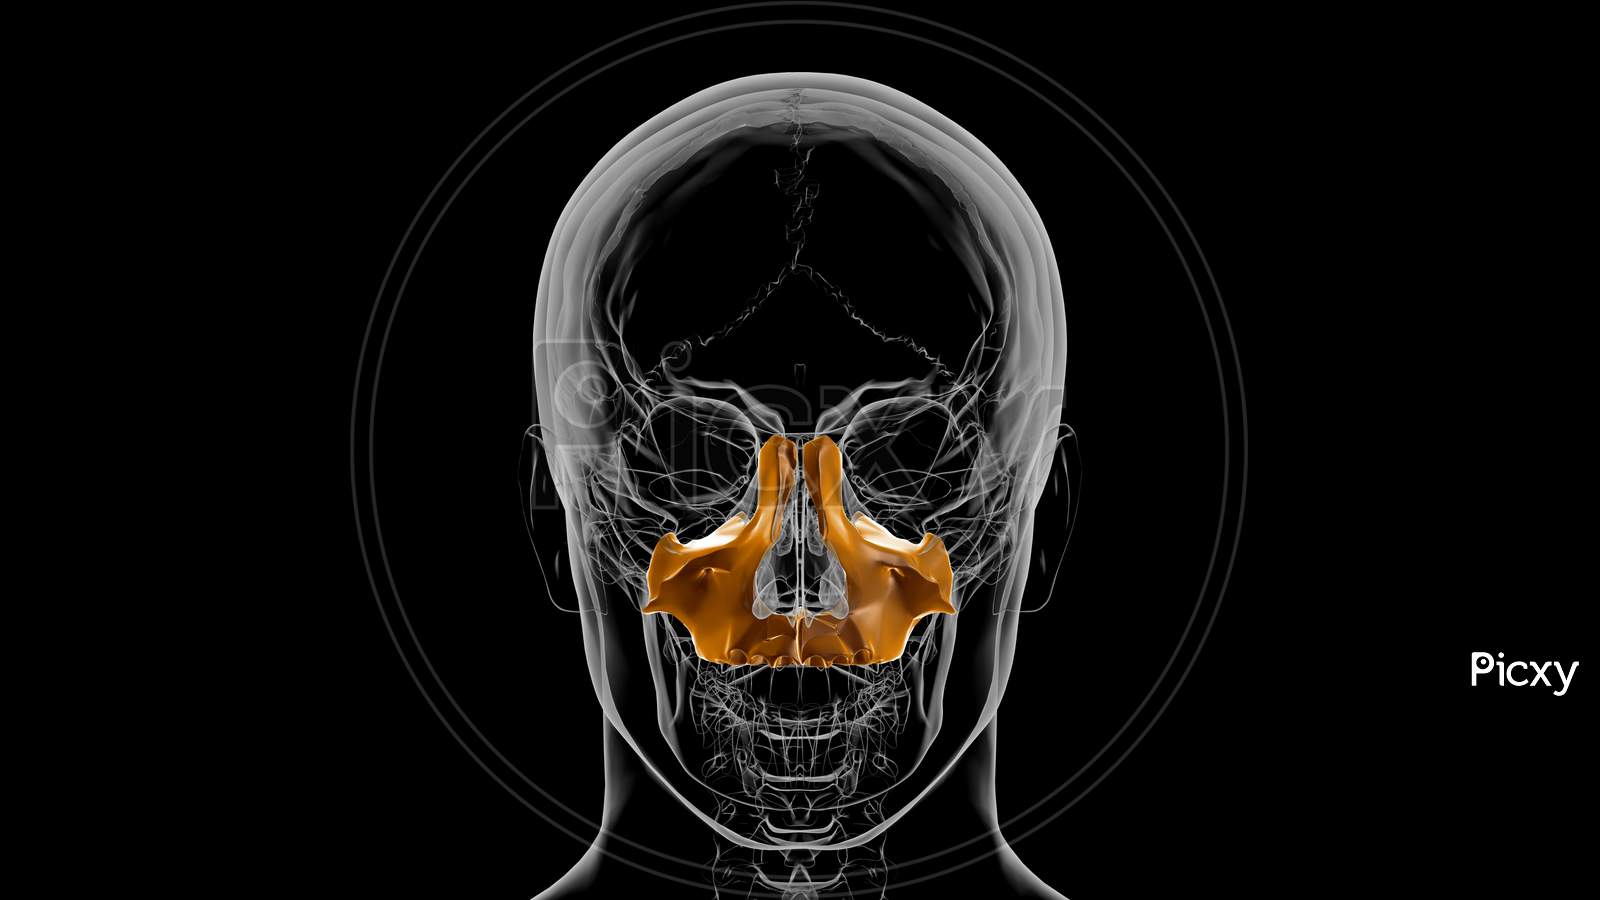 Human Skeleton Skull Maxillal Bone Anatomy For Medical Concept 3D